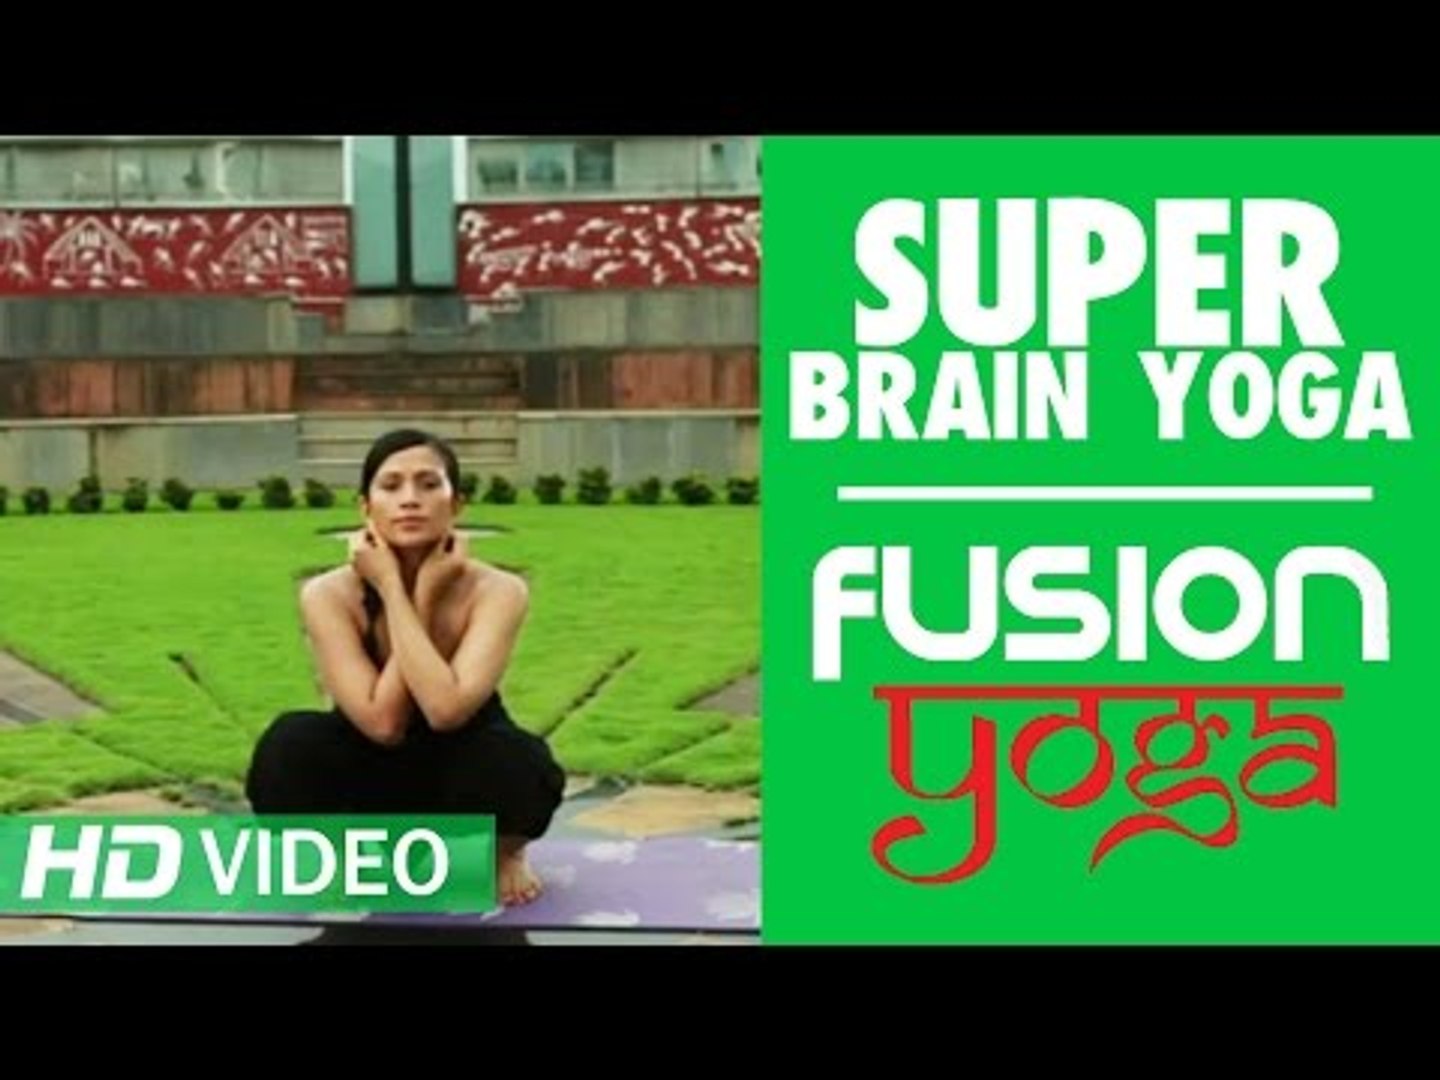 Fusion Yoga - Super Brain Yoga